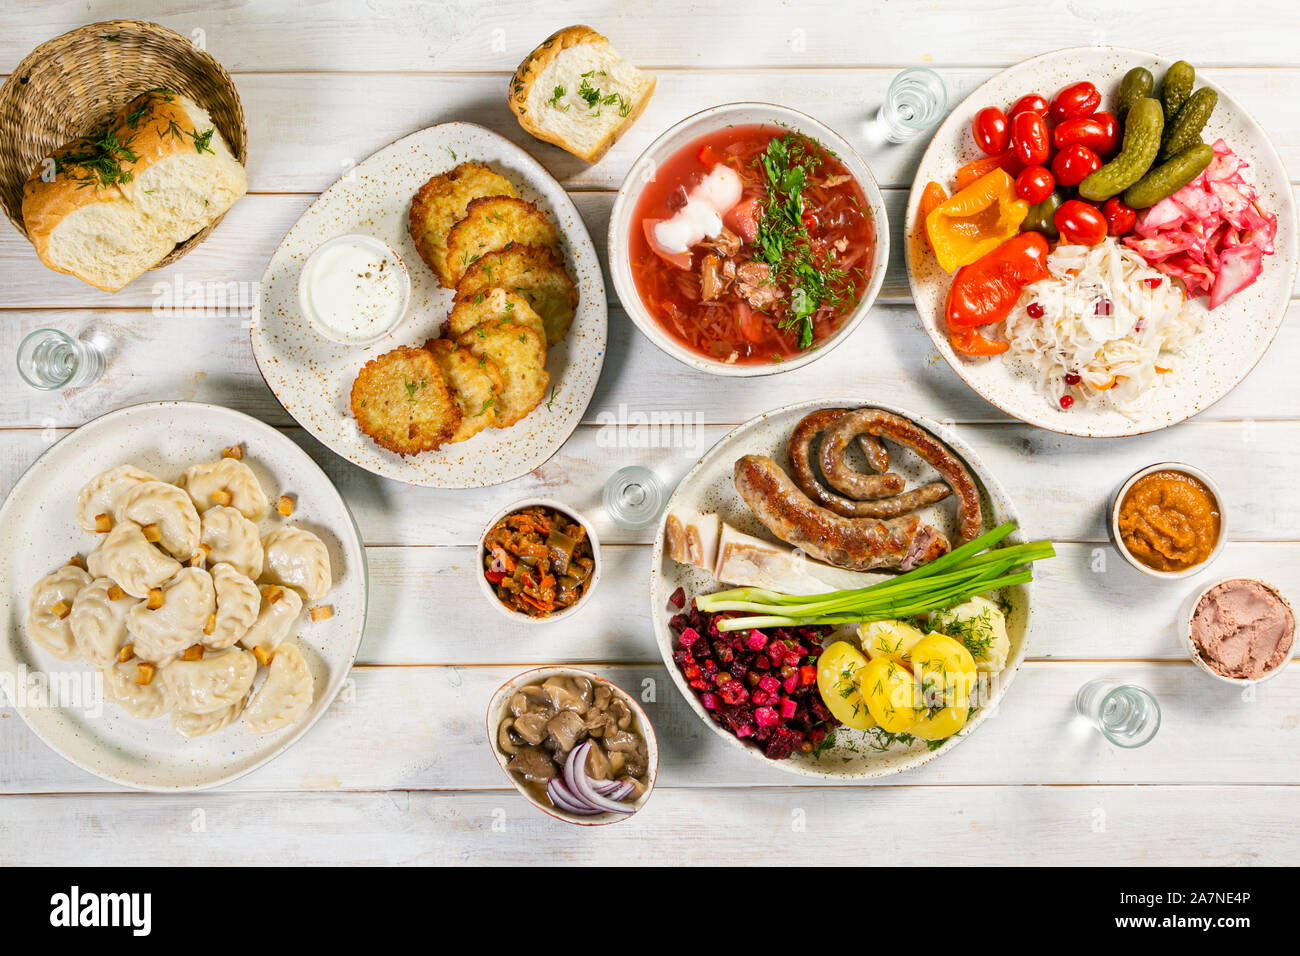 Selection of traditional ukrainian food - borsch, perogies, potato cakes, pickled vegetables Stock Photo